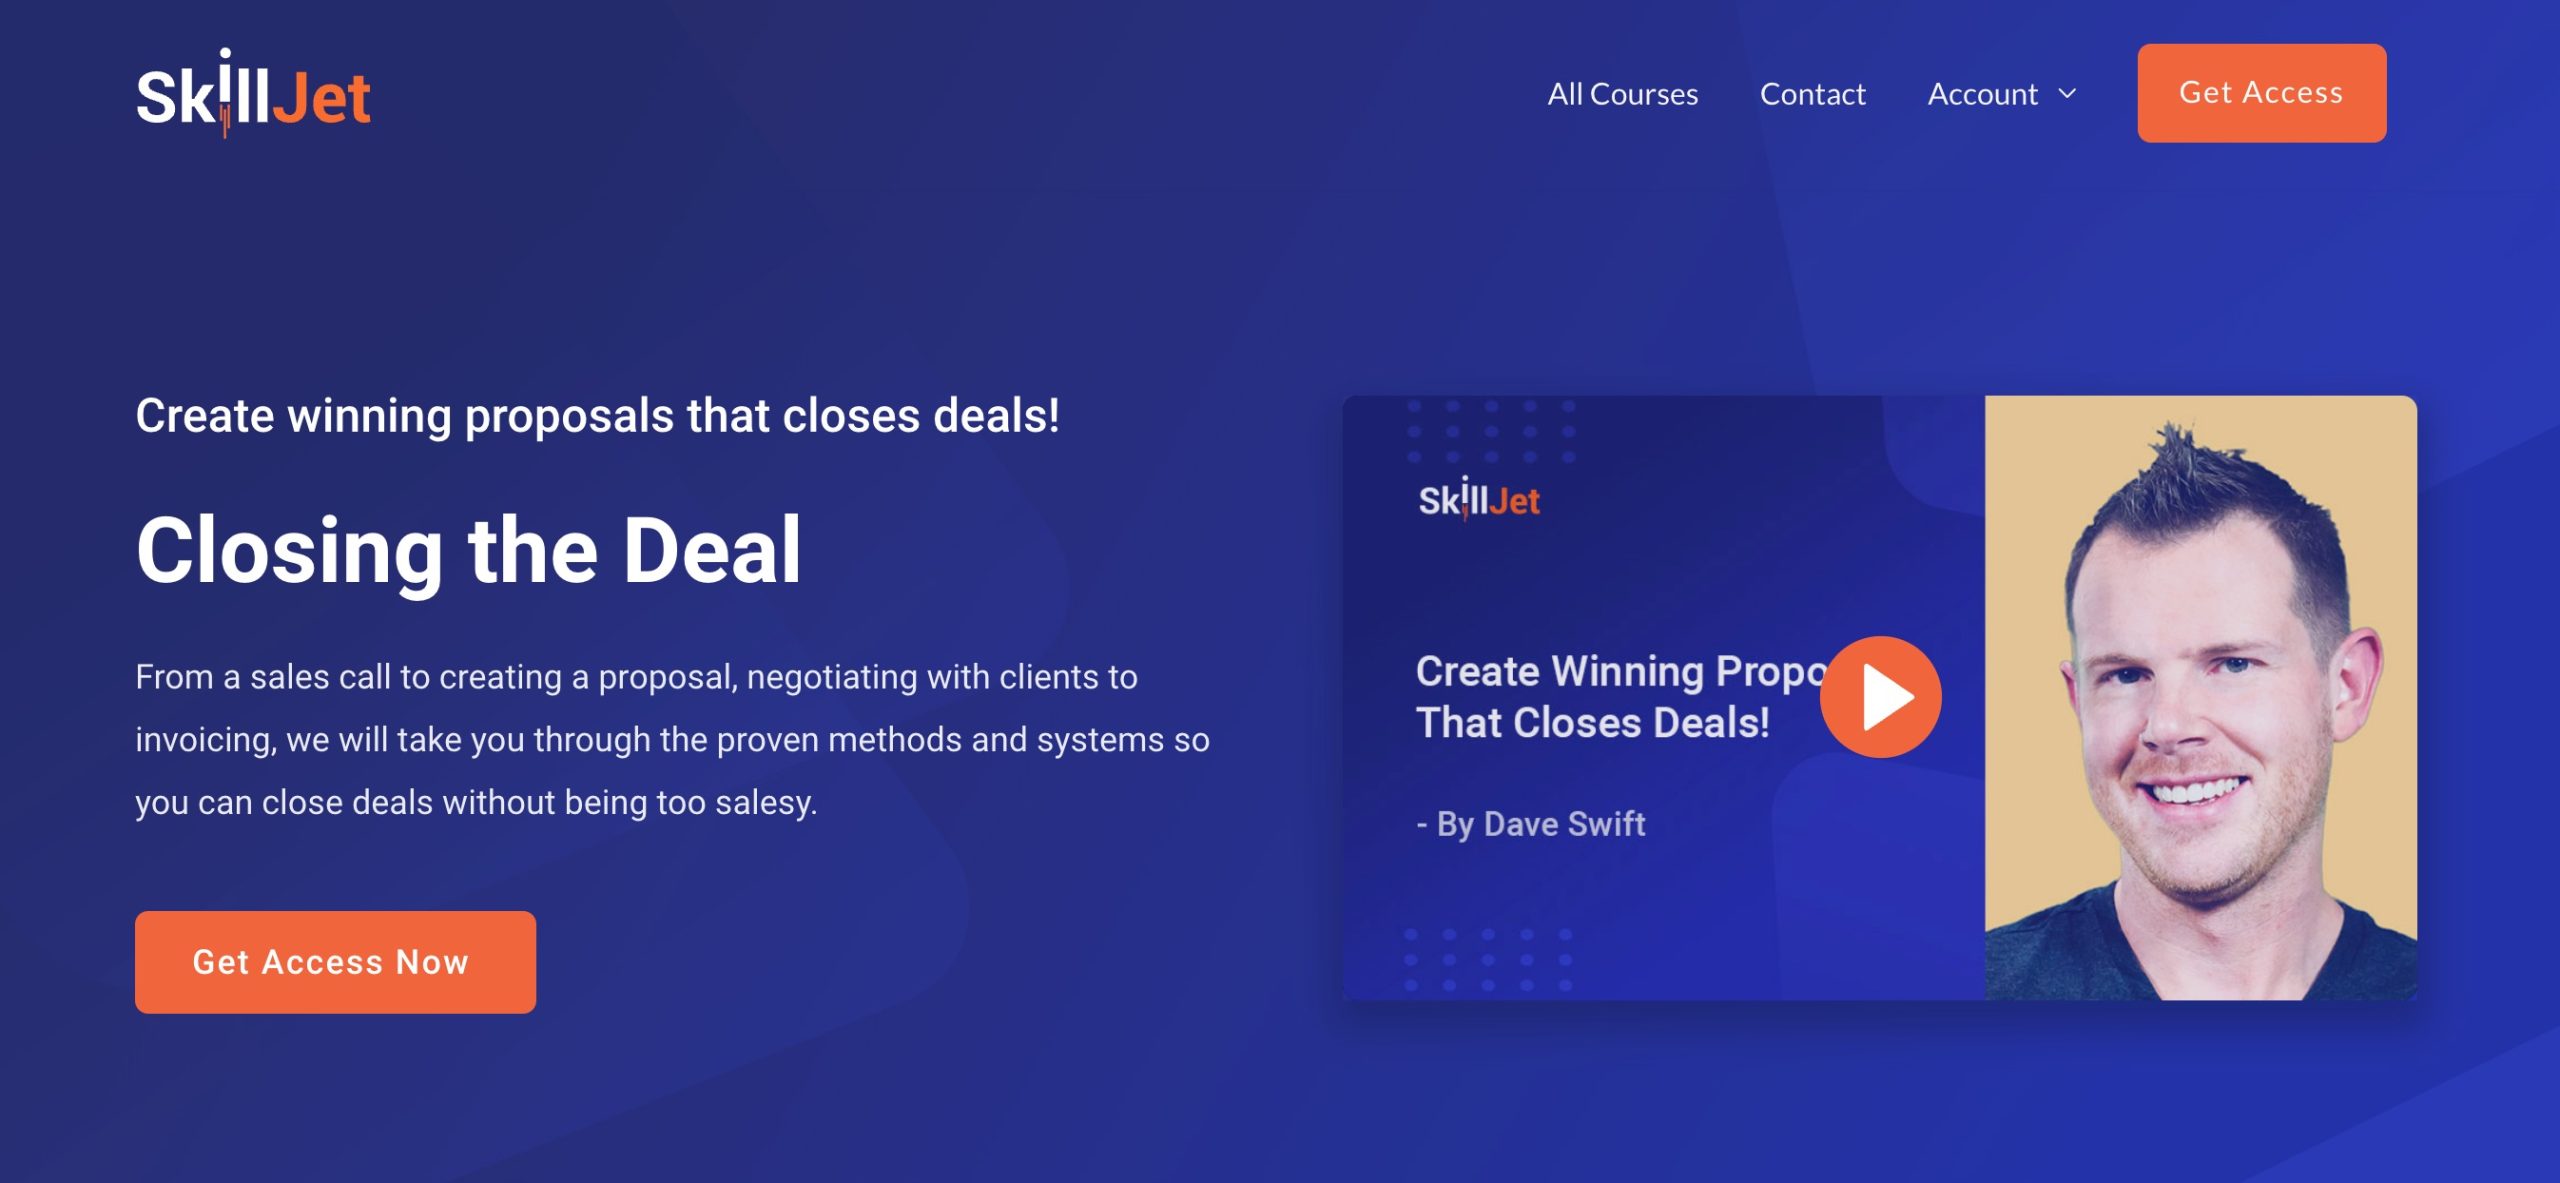 SkillJet - Closing Deal 